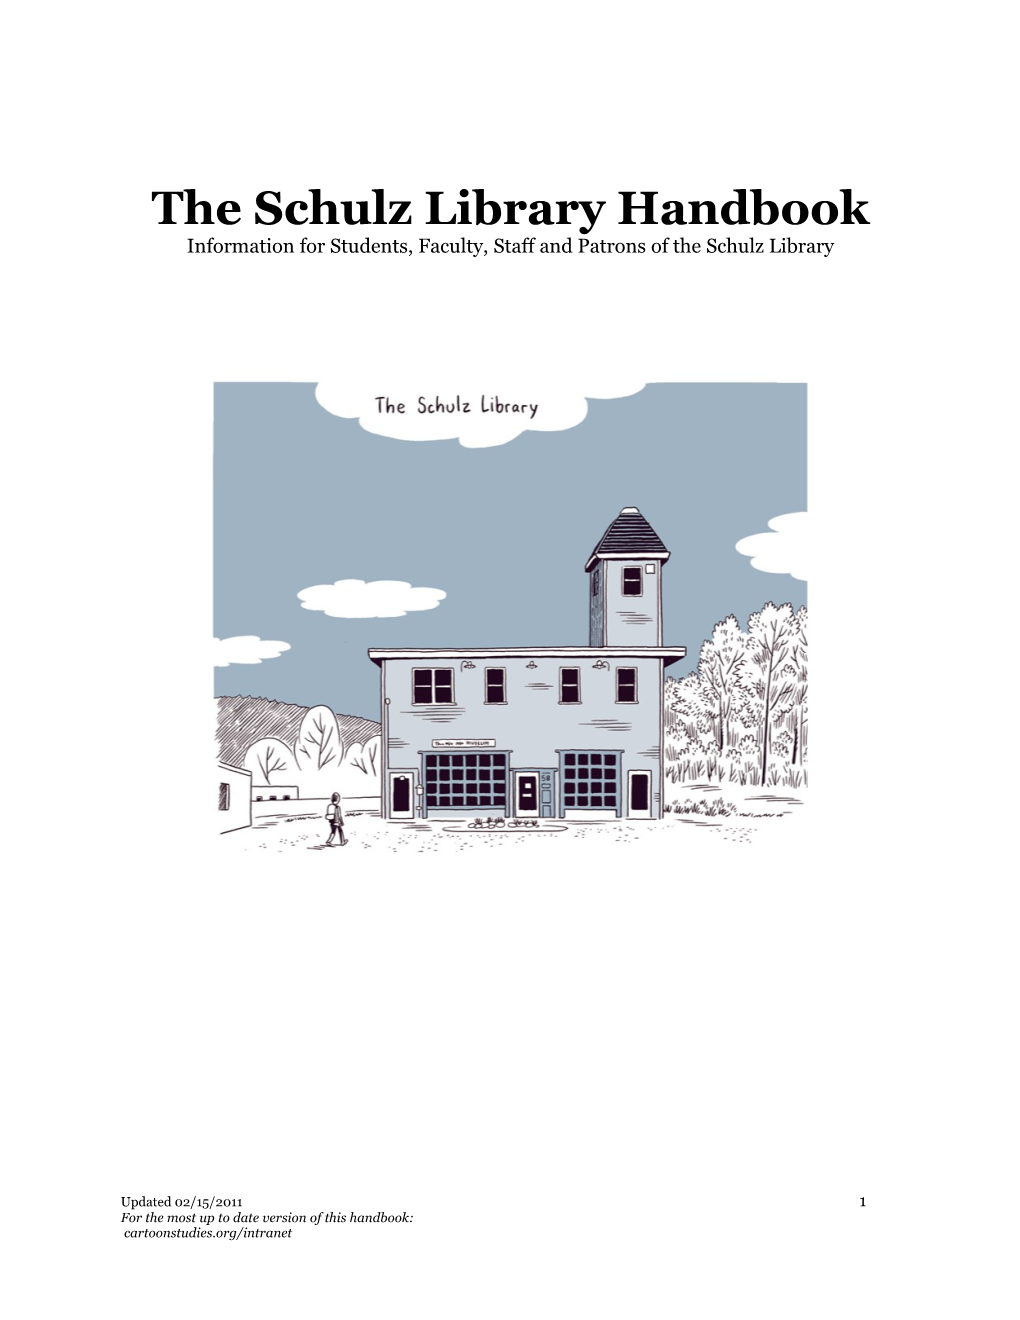 Schulz Library Handbook